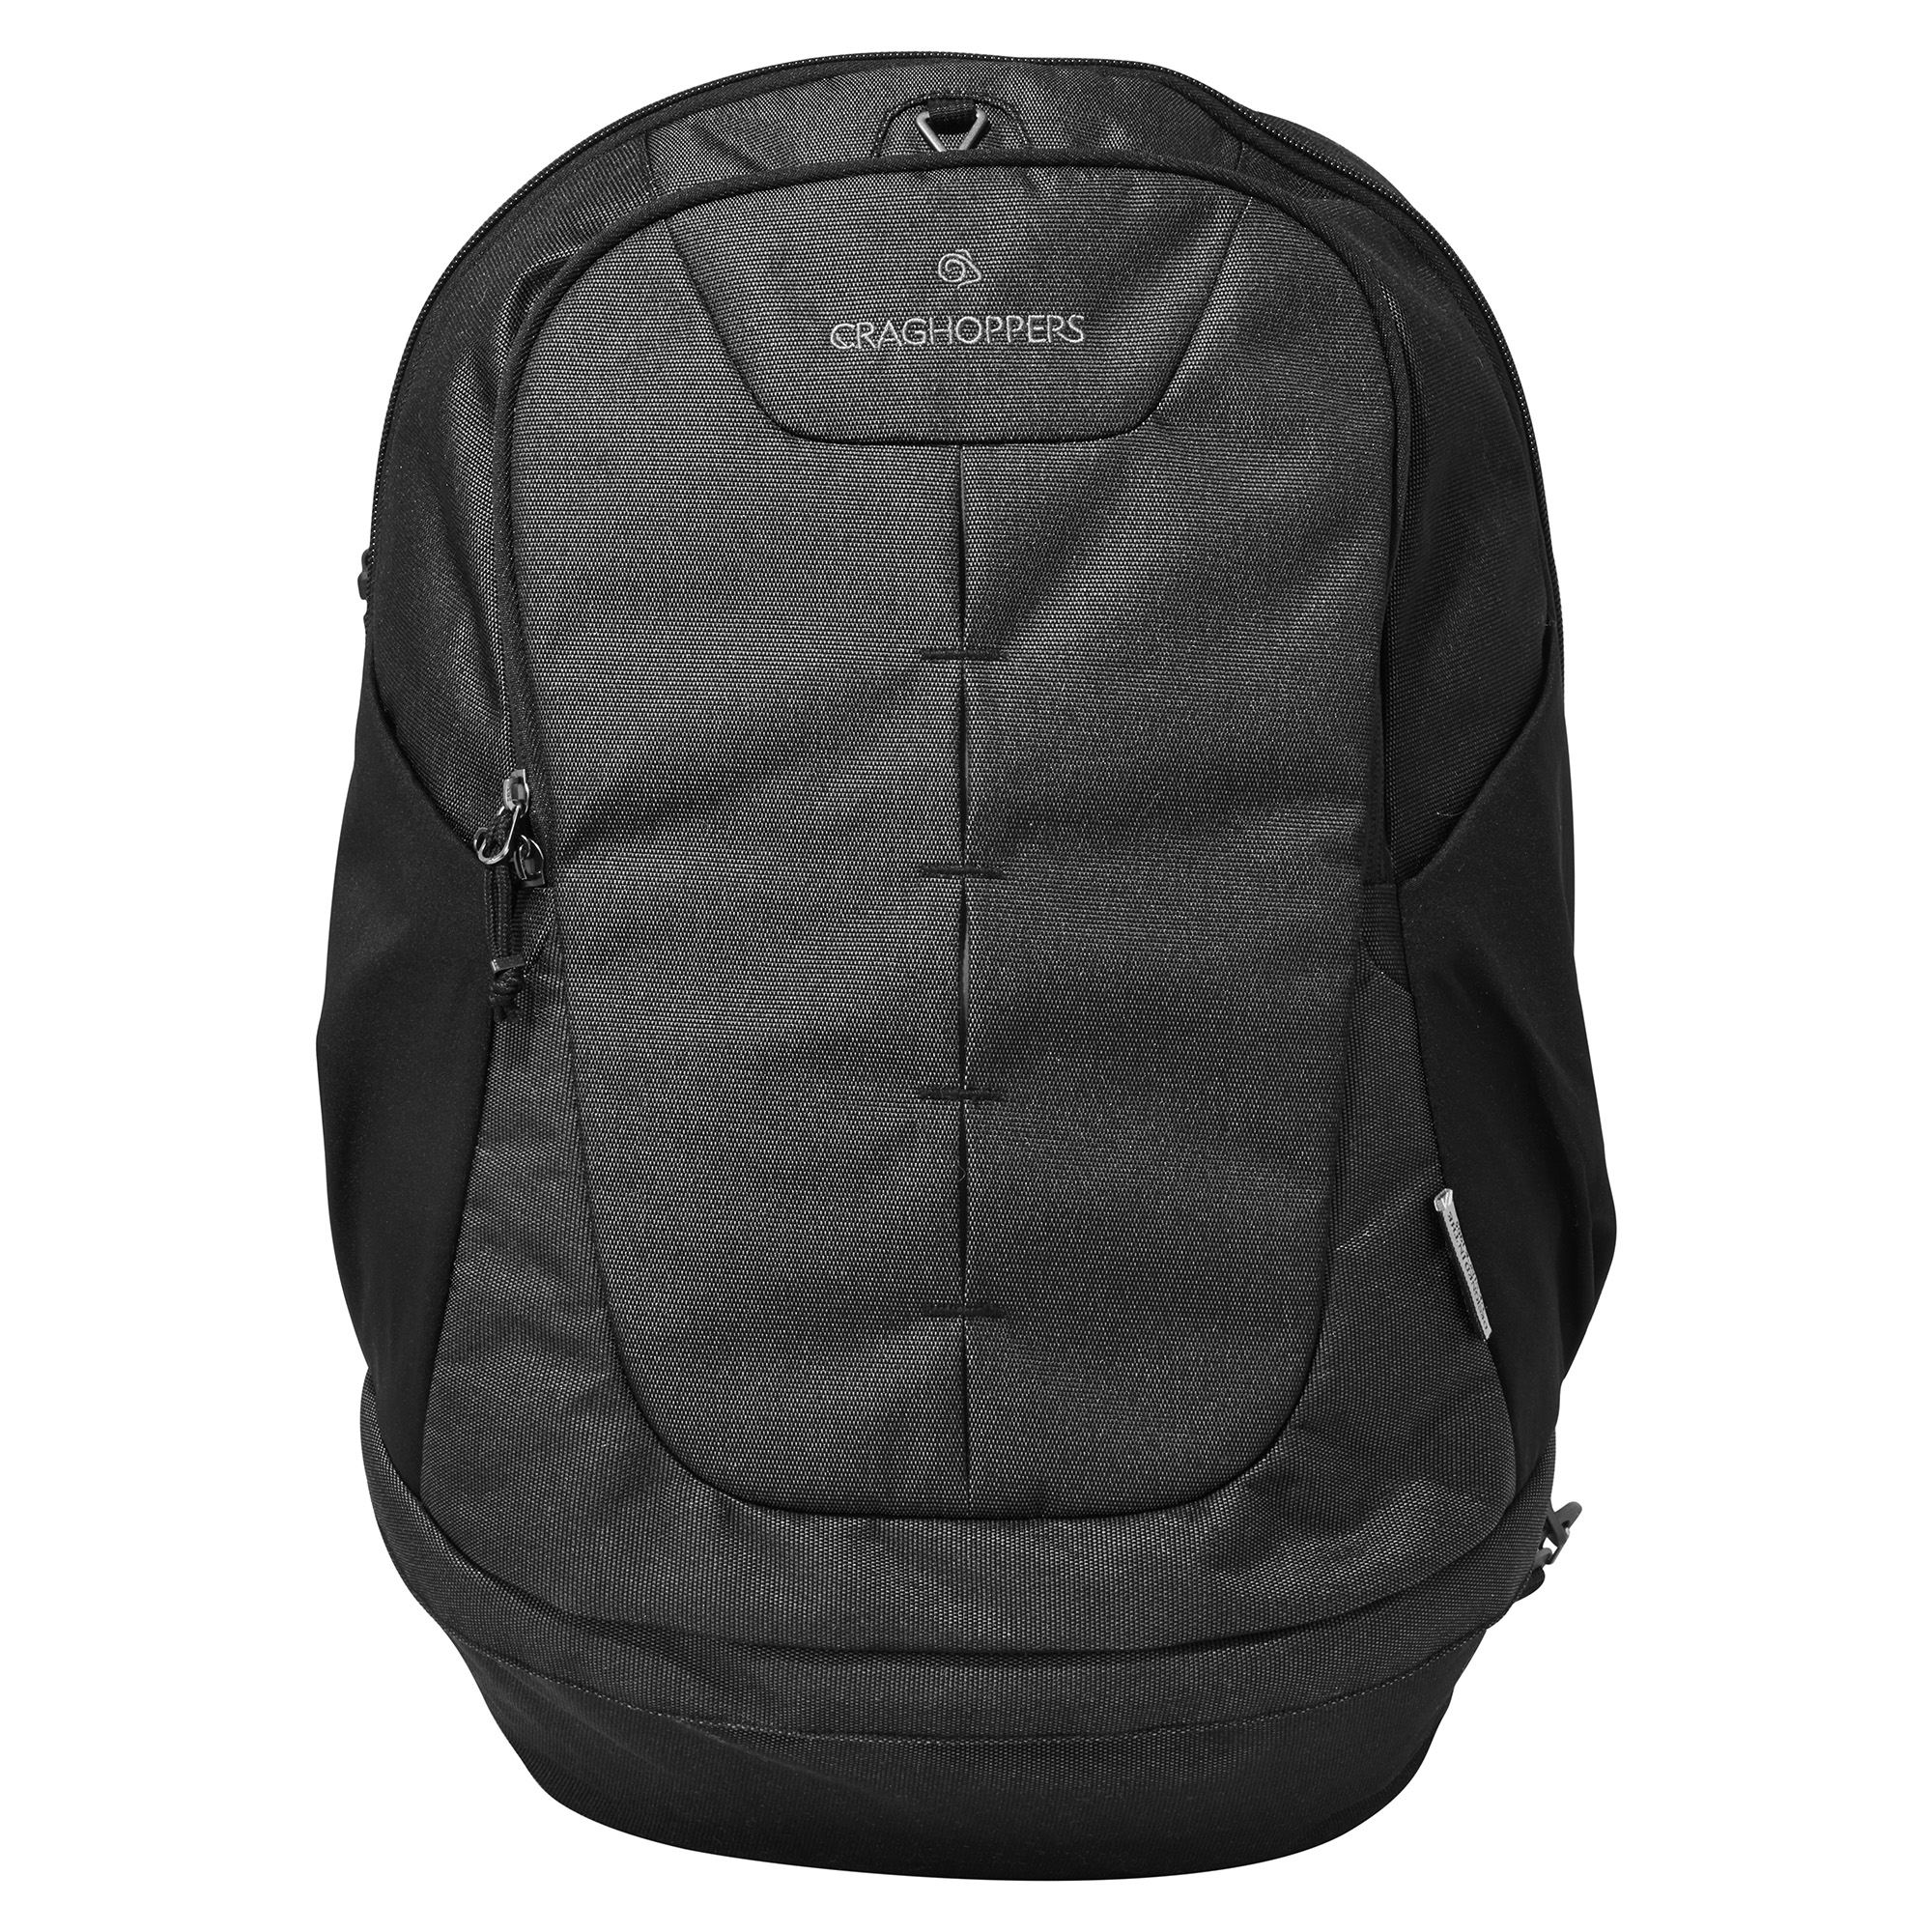 AntiTheft Backpack 25 liter